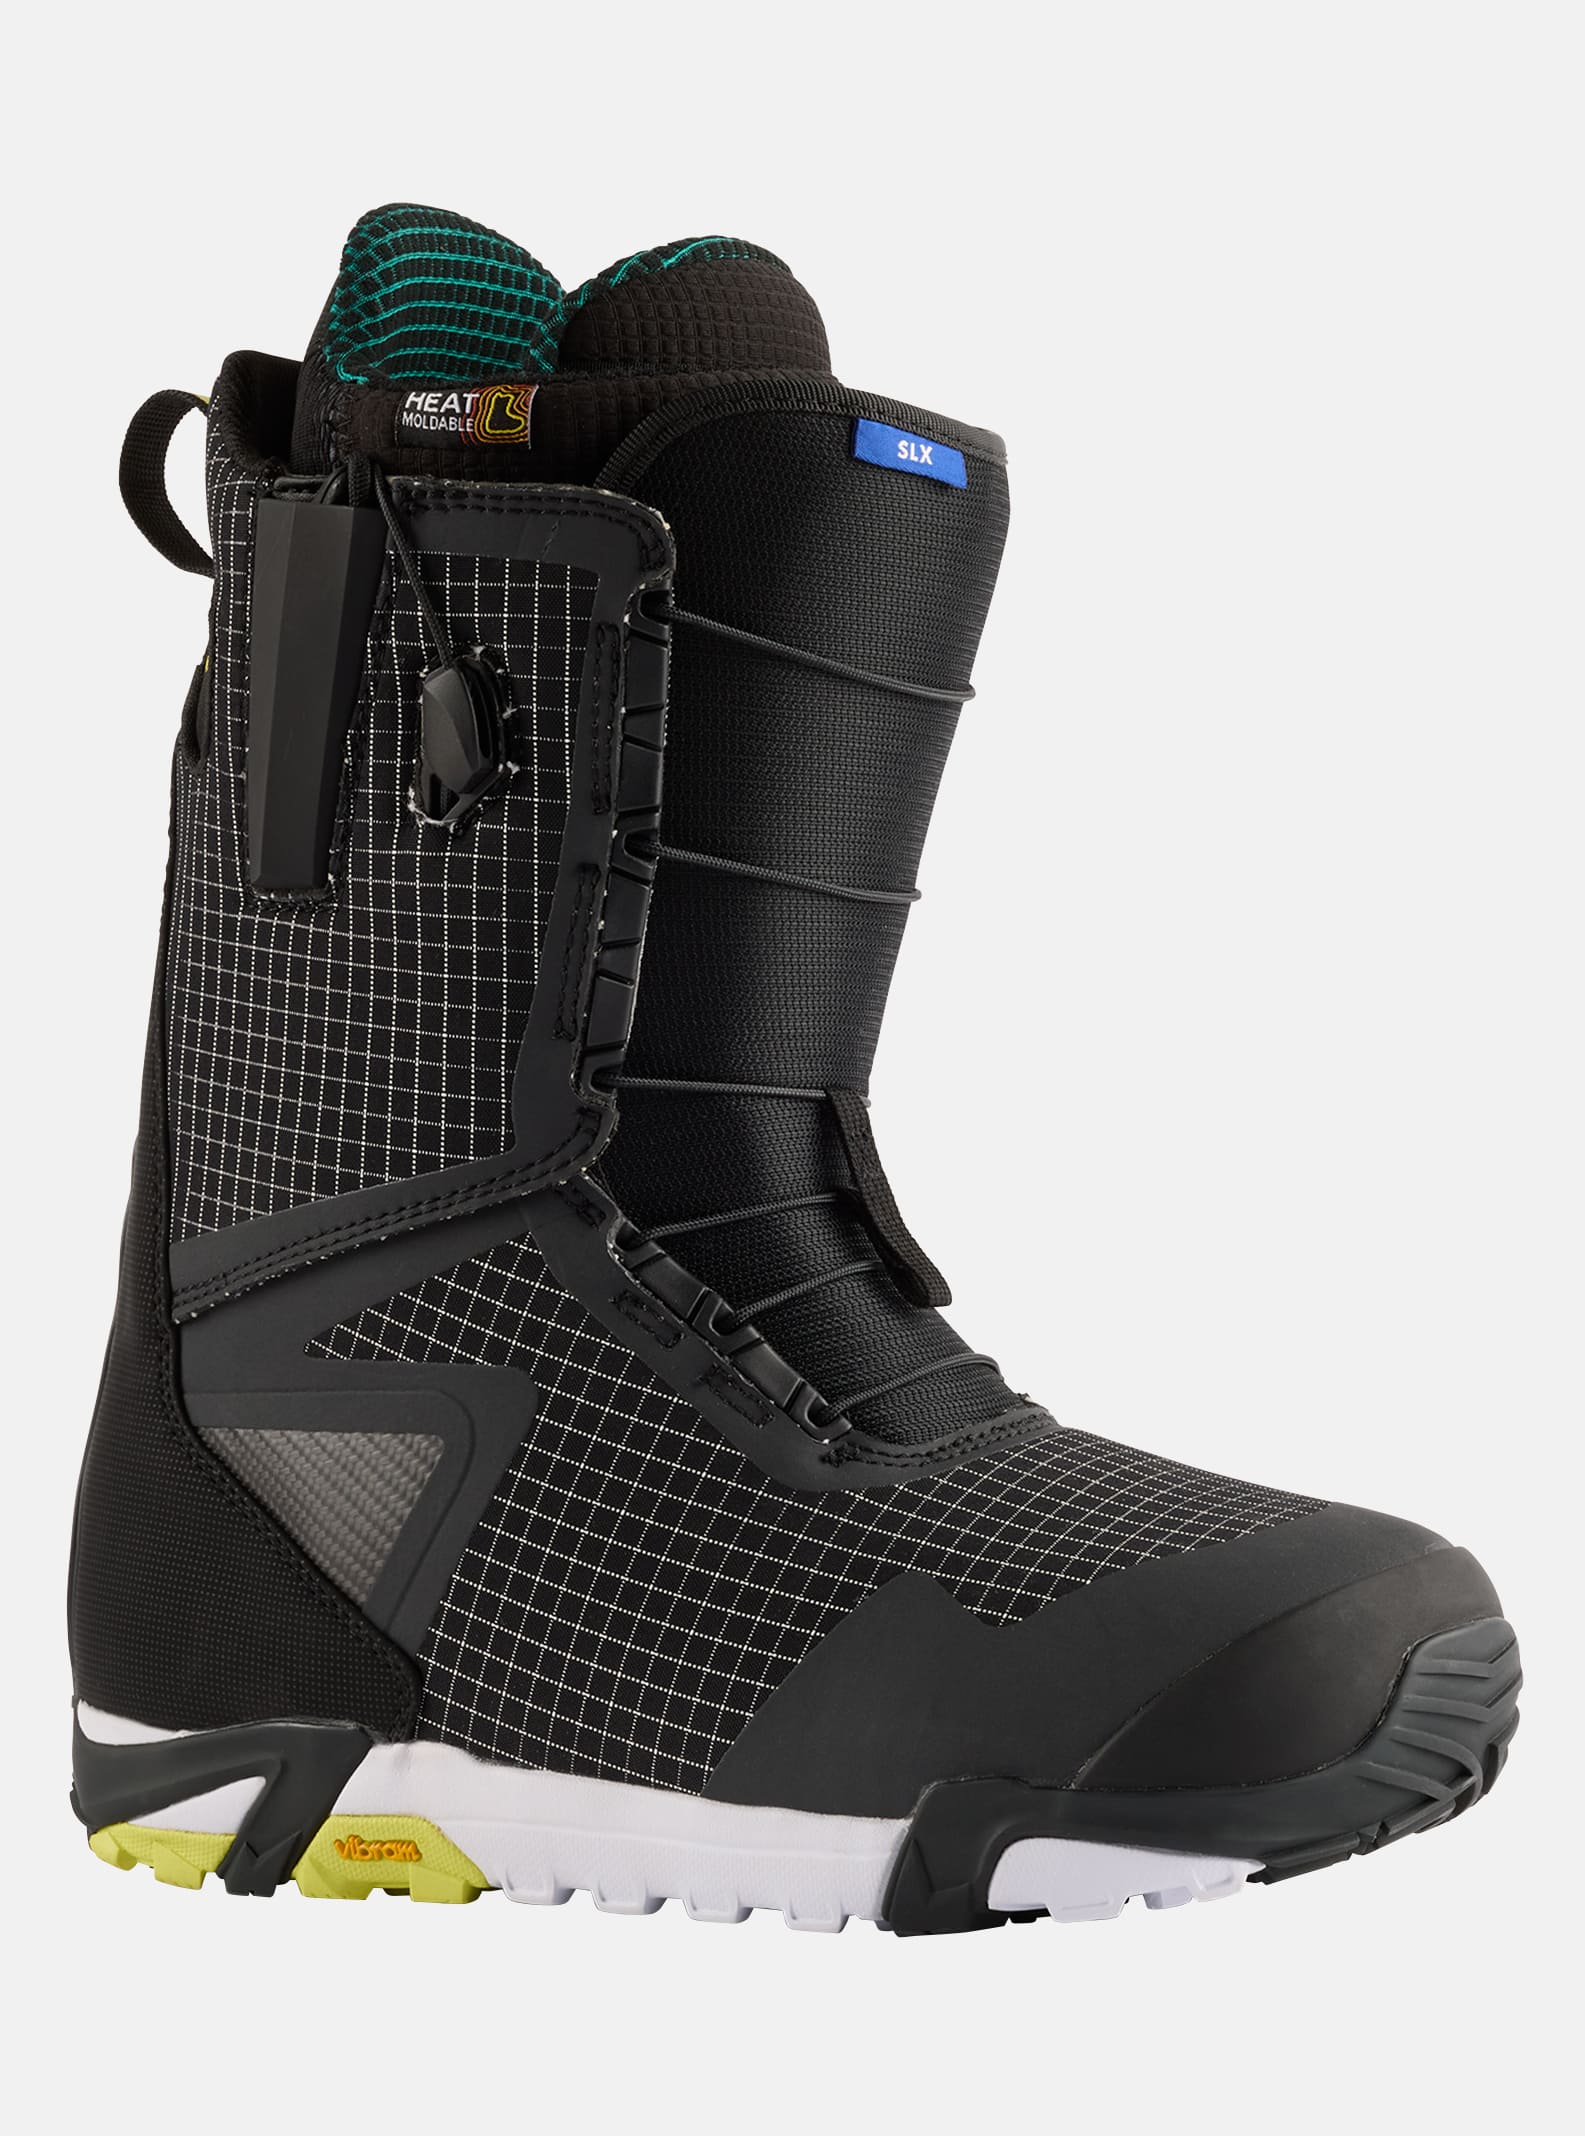 Ventana mundial preámbulo Pantano Men's SLX Snowboard Boots | Burton.com Winter 2023 ES